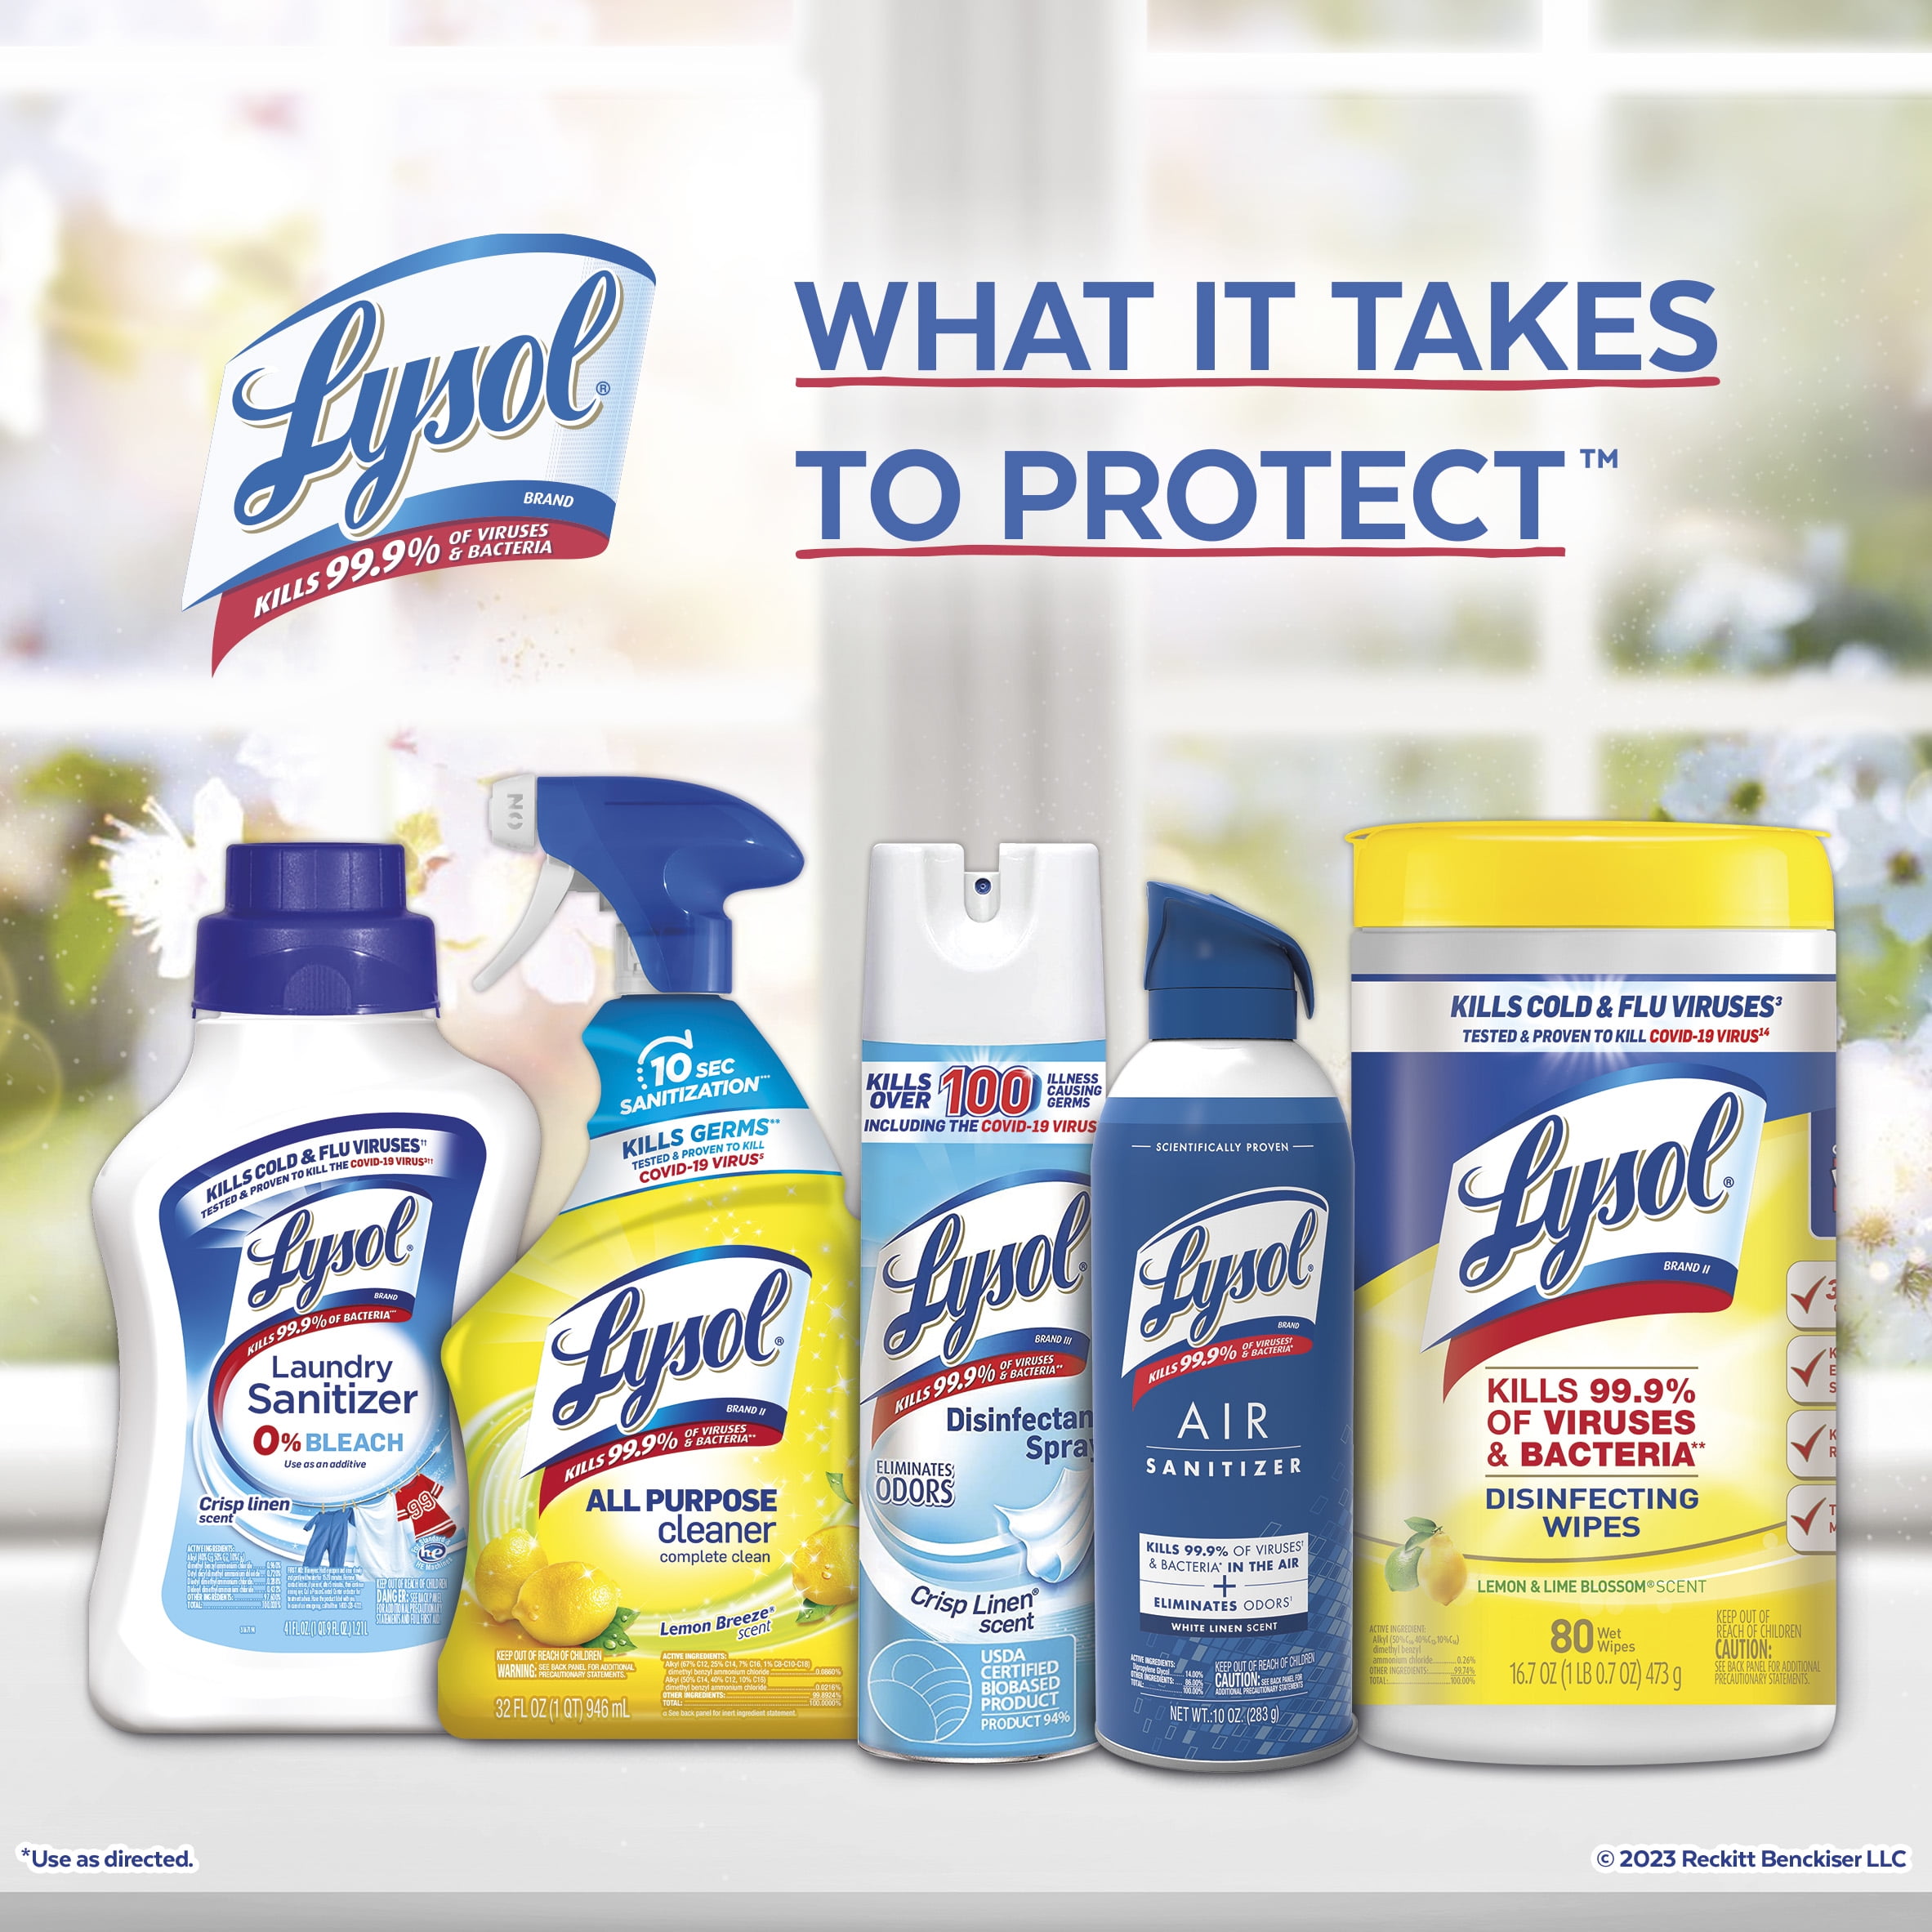 Spray desinfectante Lysol Neutra Air revitalizing fresh breeze 300 ml